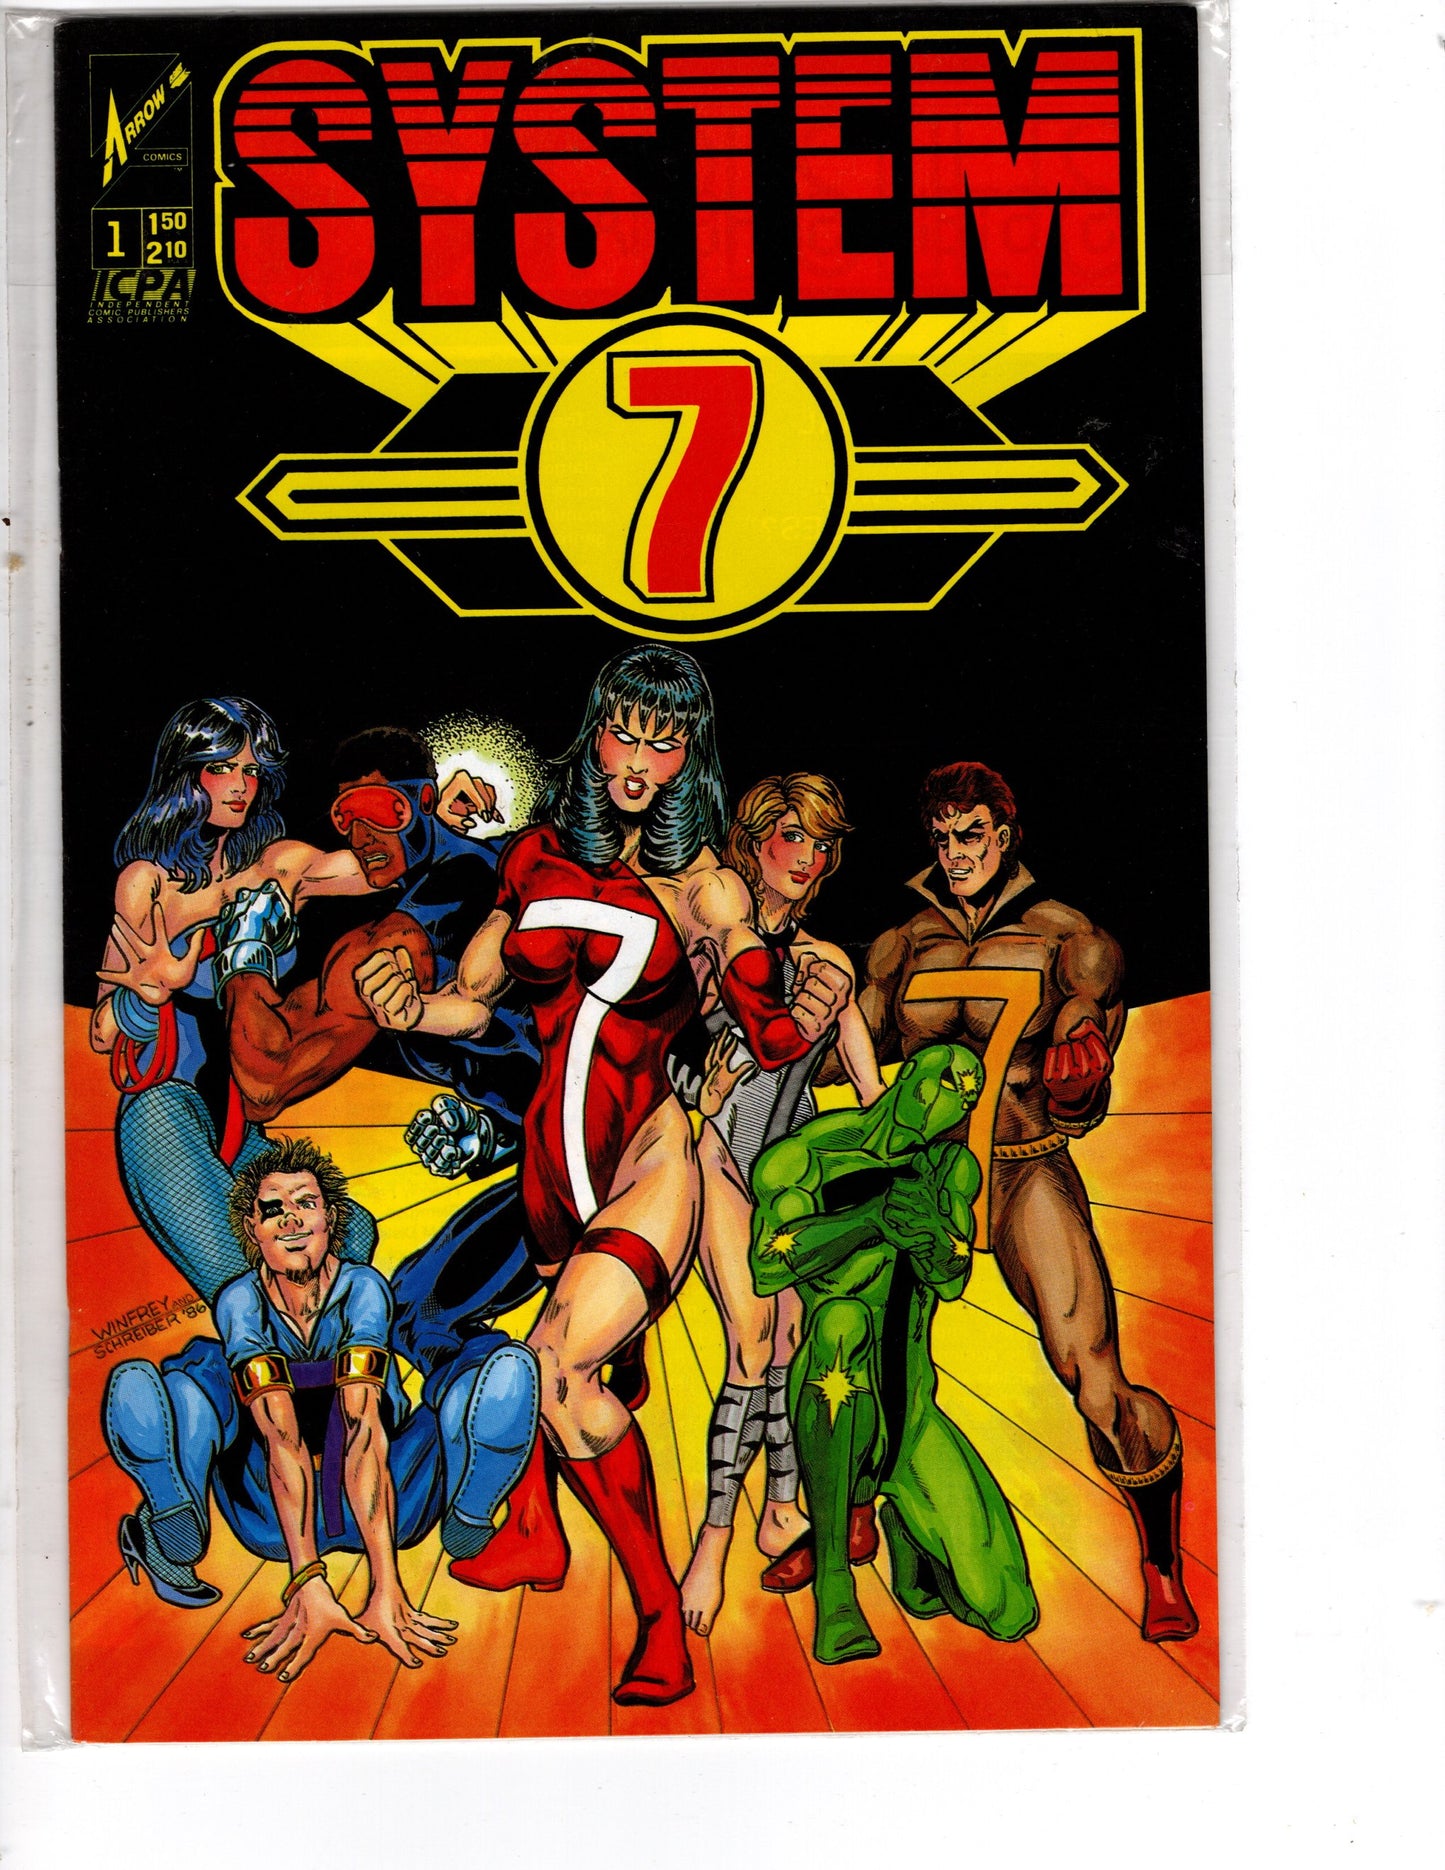 System 7 #1